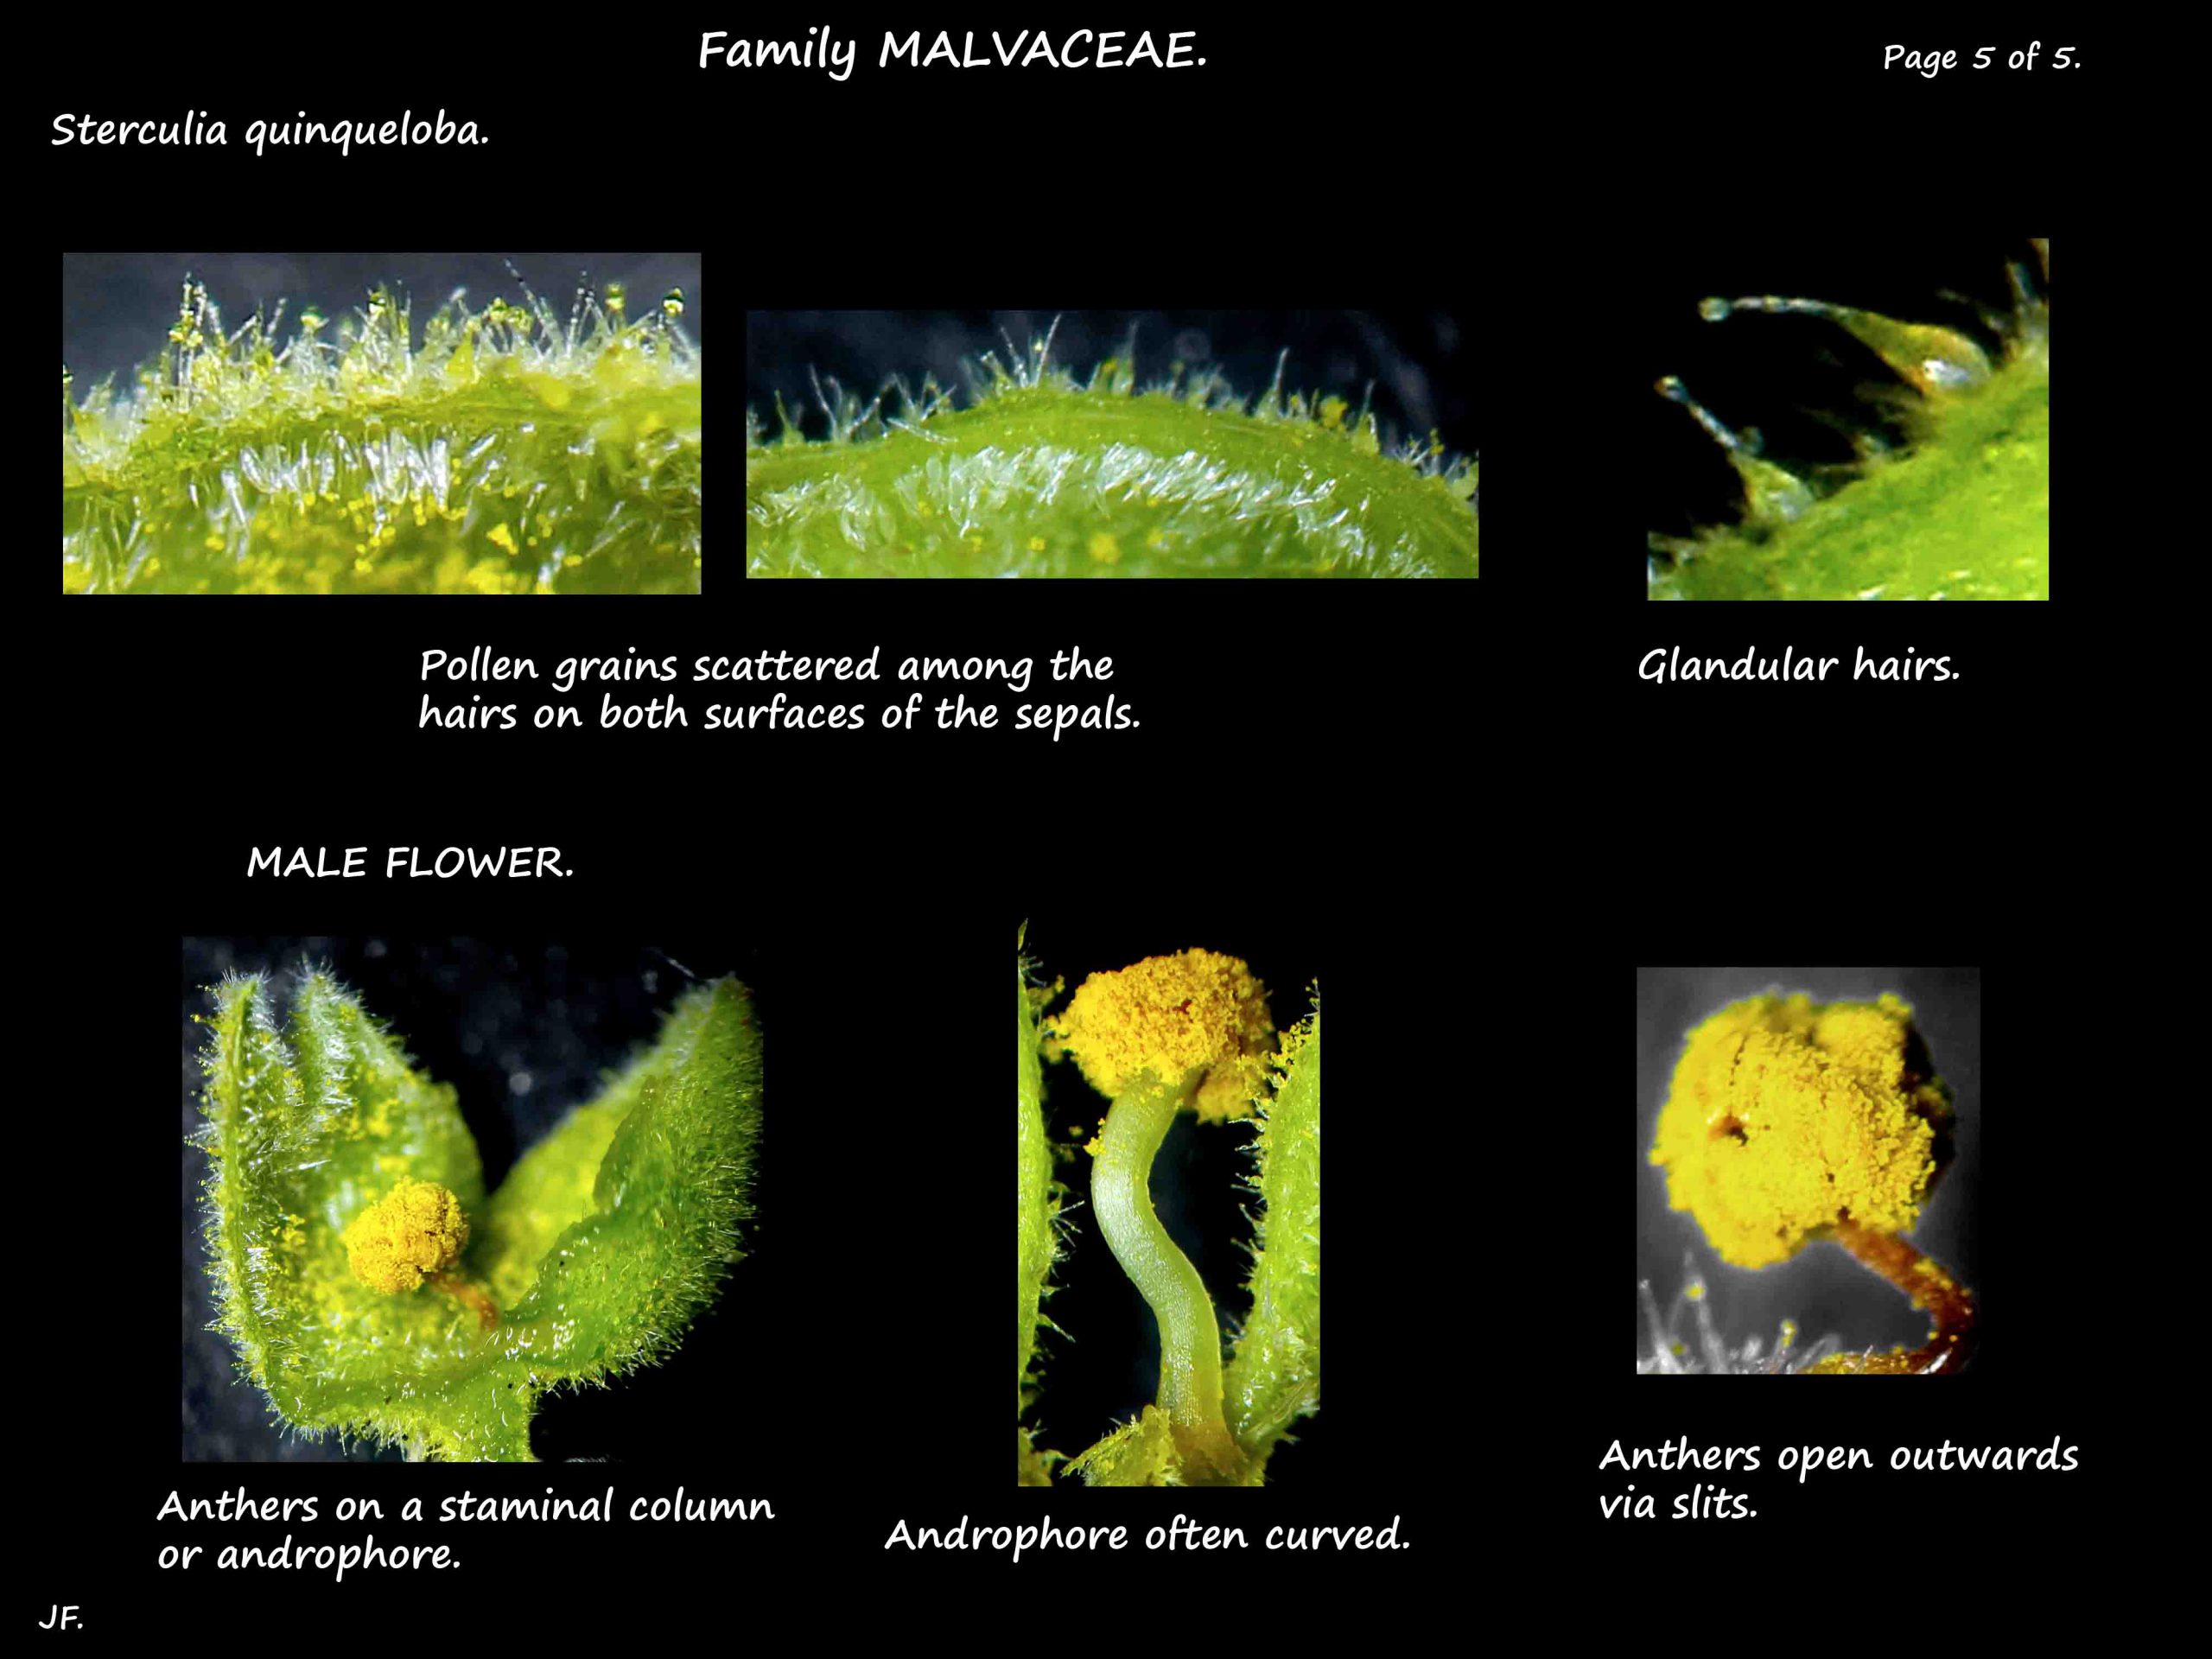 5 A Male Sterculia quinqueloba flower